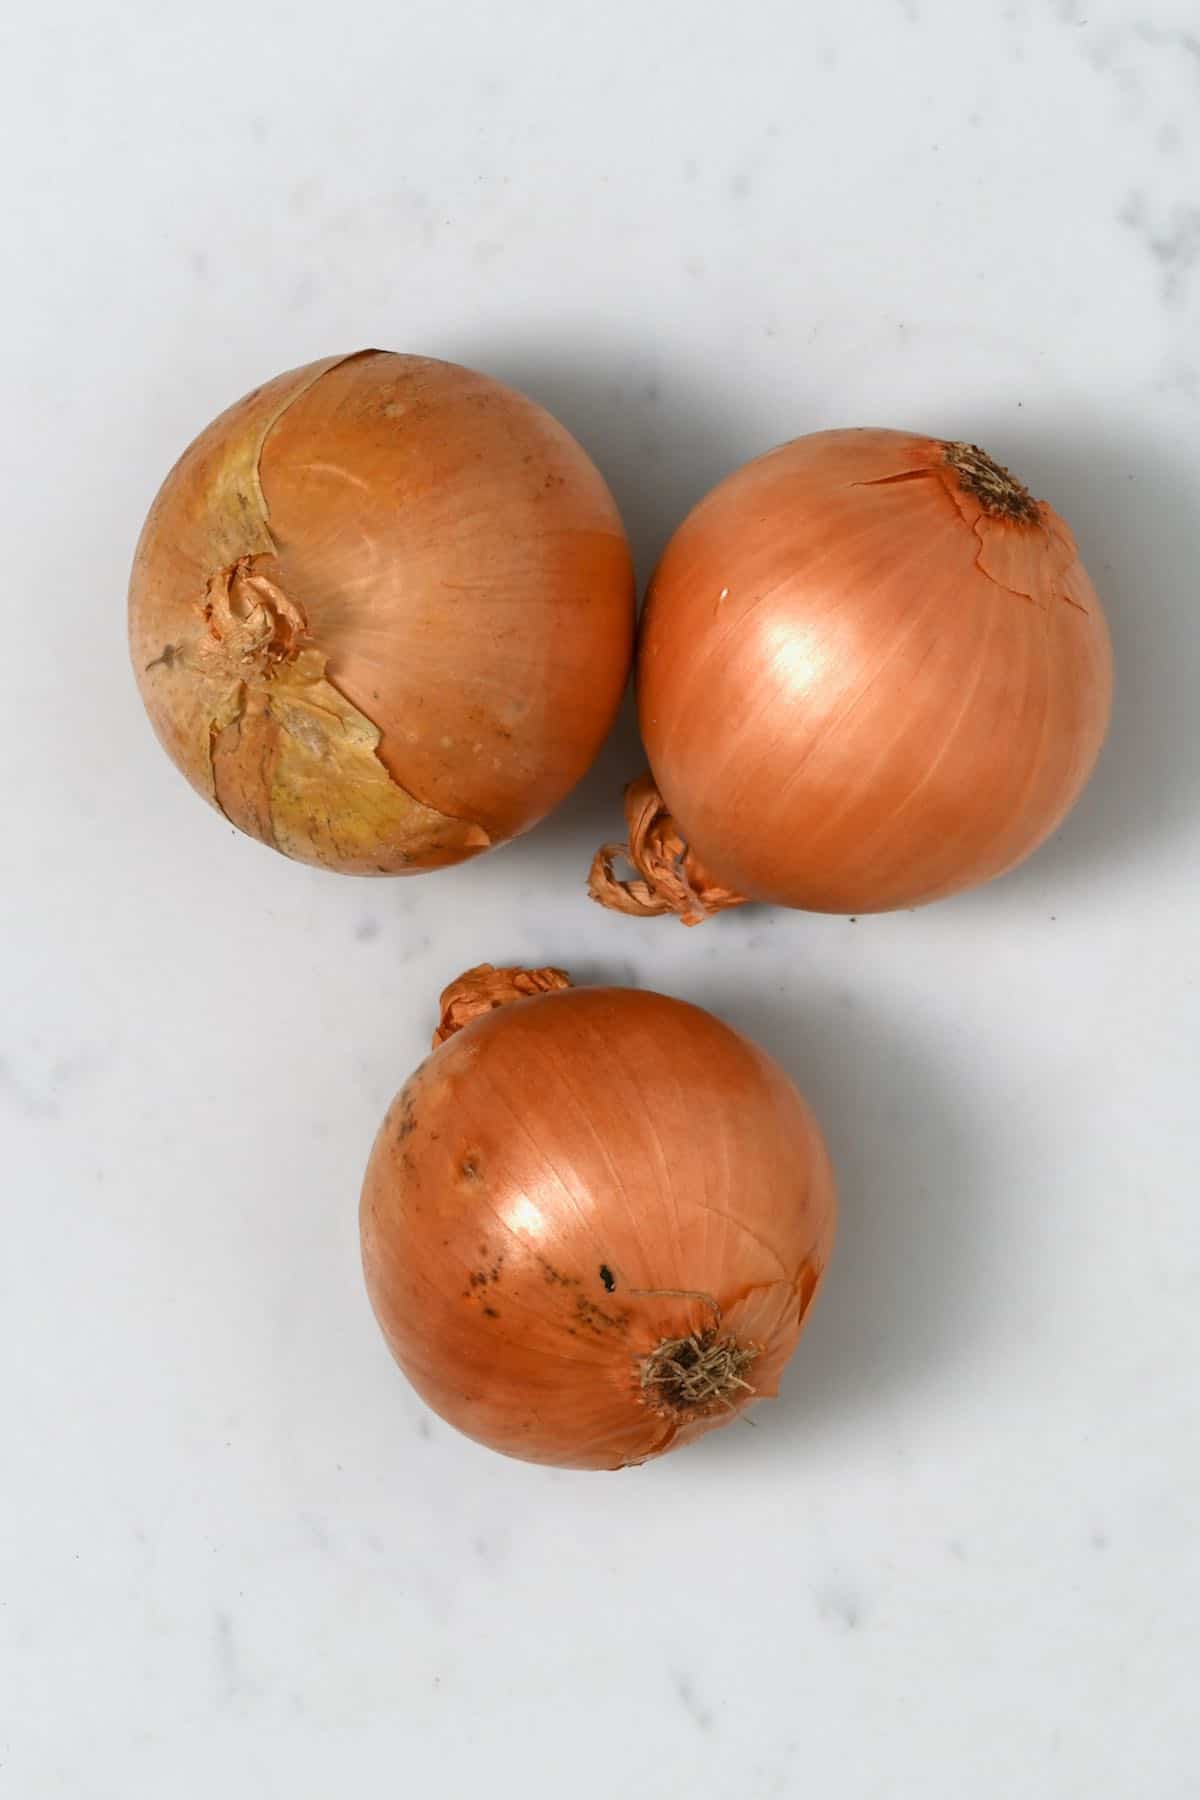 How to Make Fried Onions (Crispy Onions/Birista) - Alphafoodie